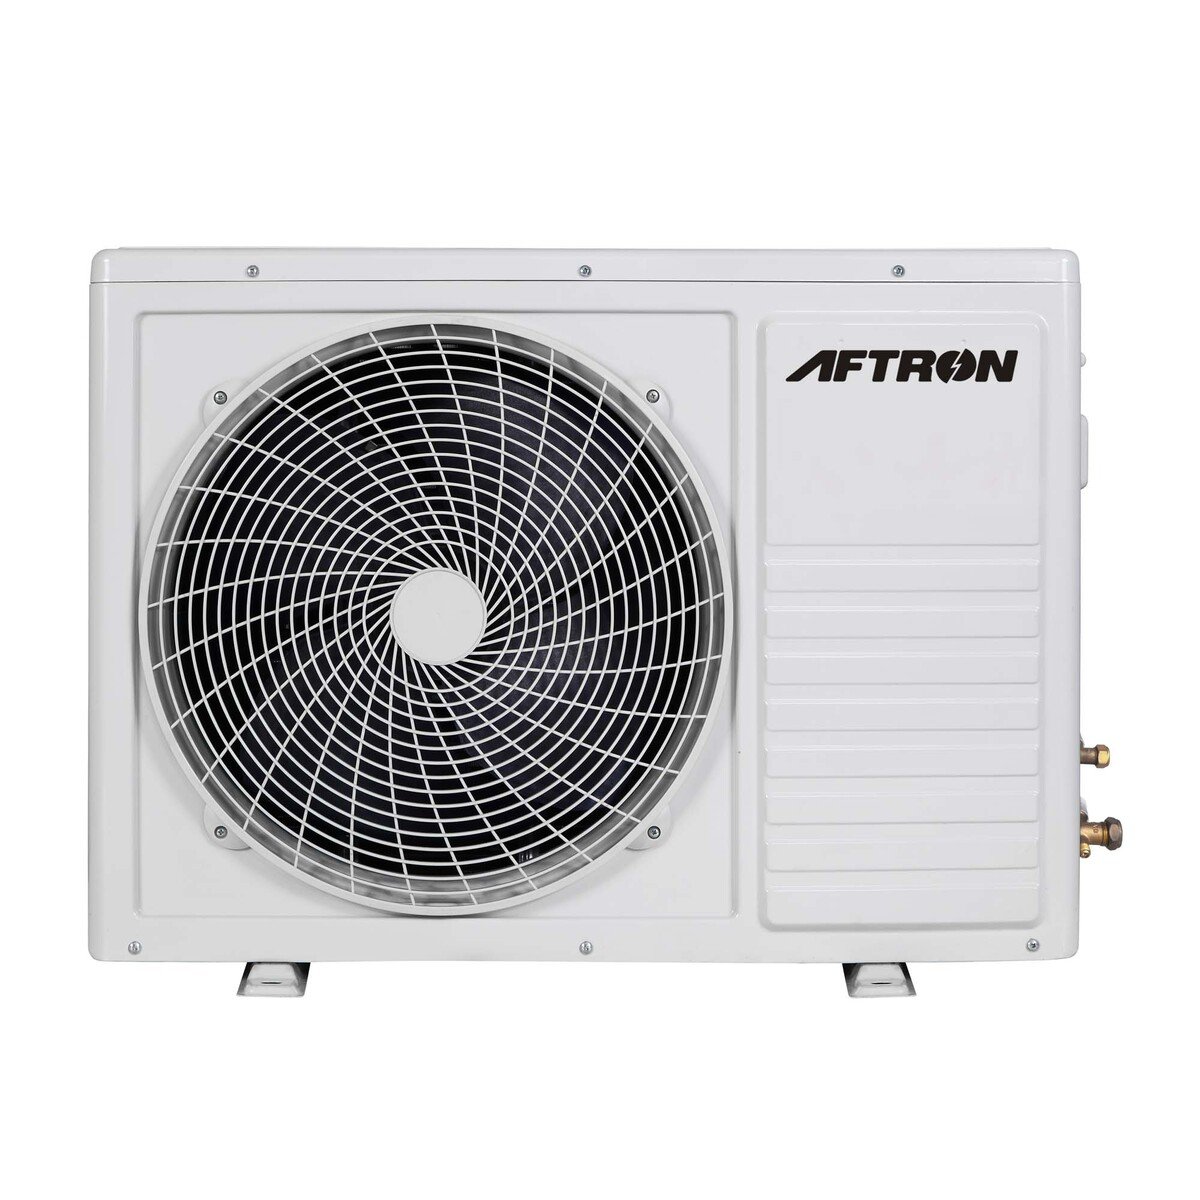 Aftron Split Air Conditioner AF-W-18095BE/CE-S21 1.5Ton